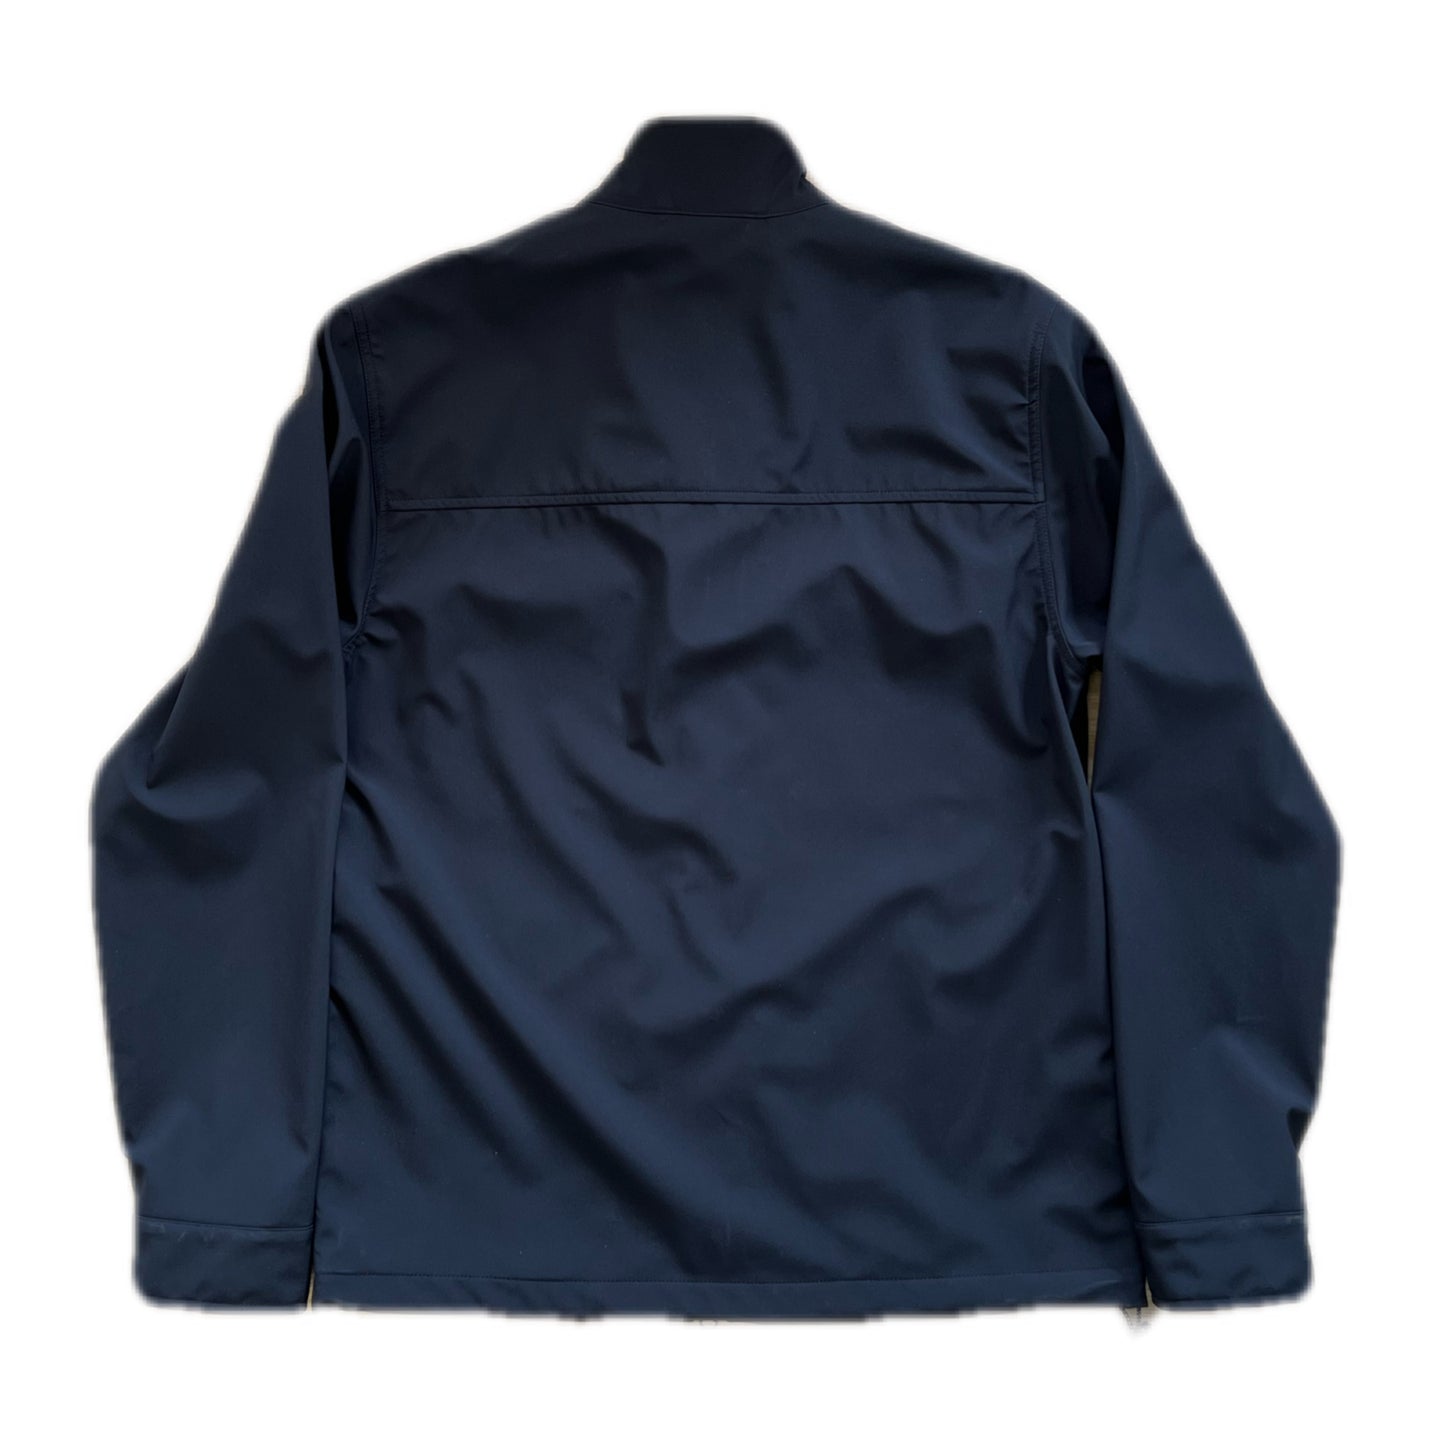 adhoc - Jacket Shirt Cobalto Blue